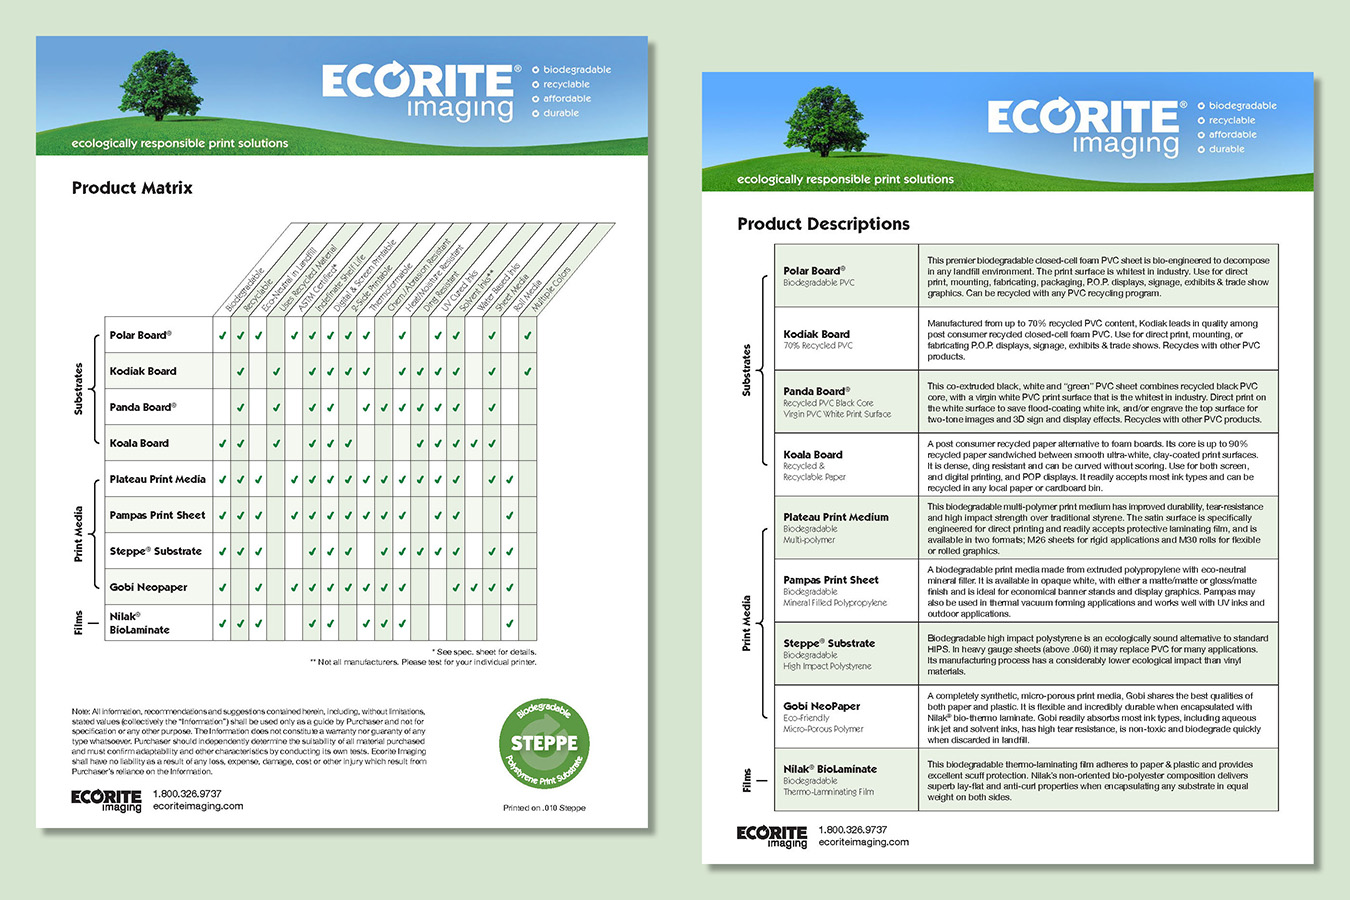 ecorite 12 : Product Matrix Descriptions printed on Steppe biodegradable polystyrene